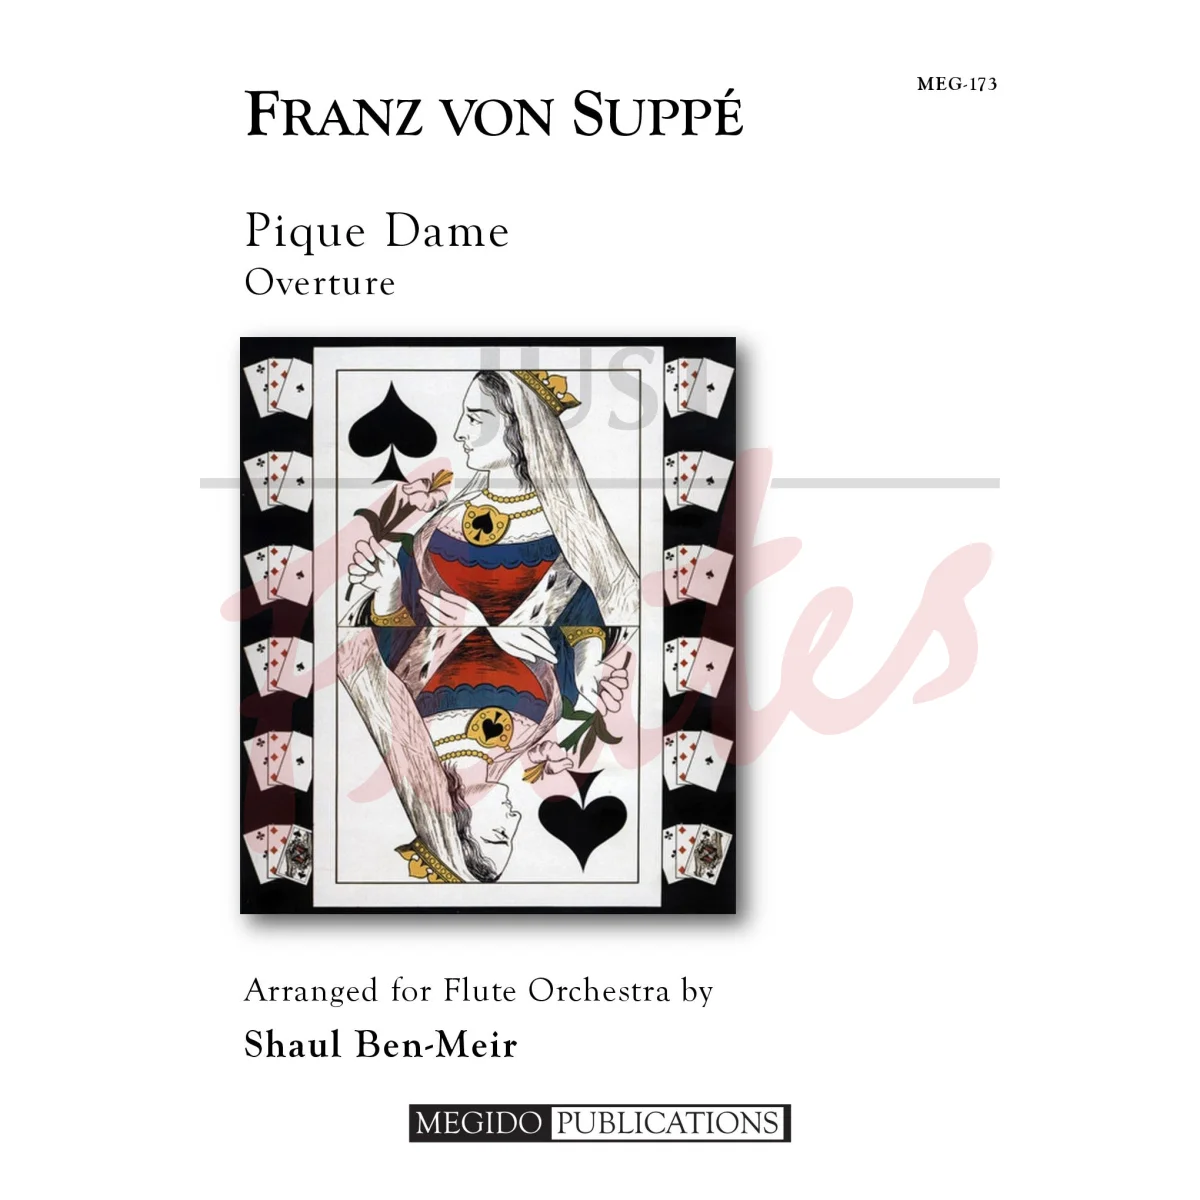 Pique Dame Overture for Flute Orchestra